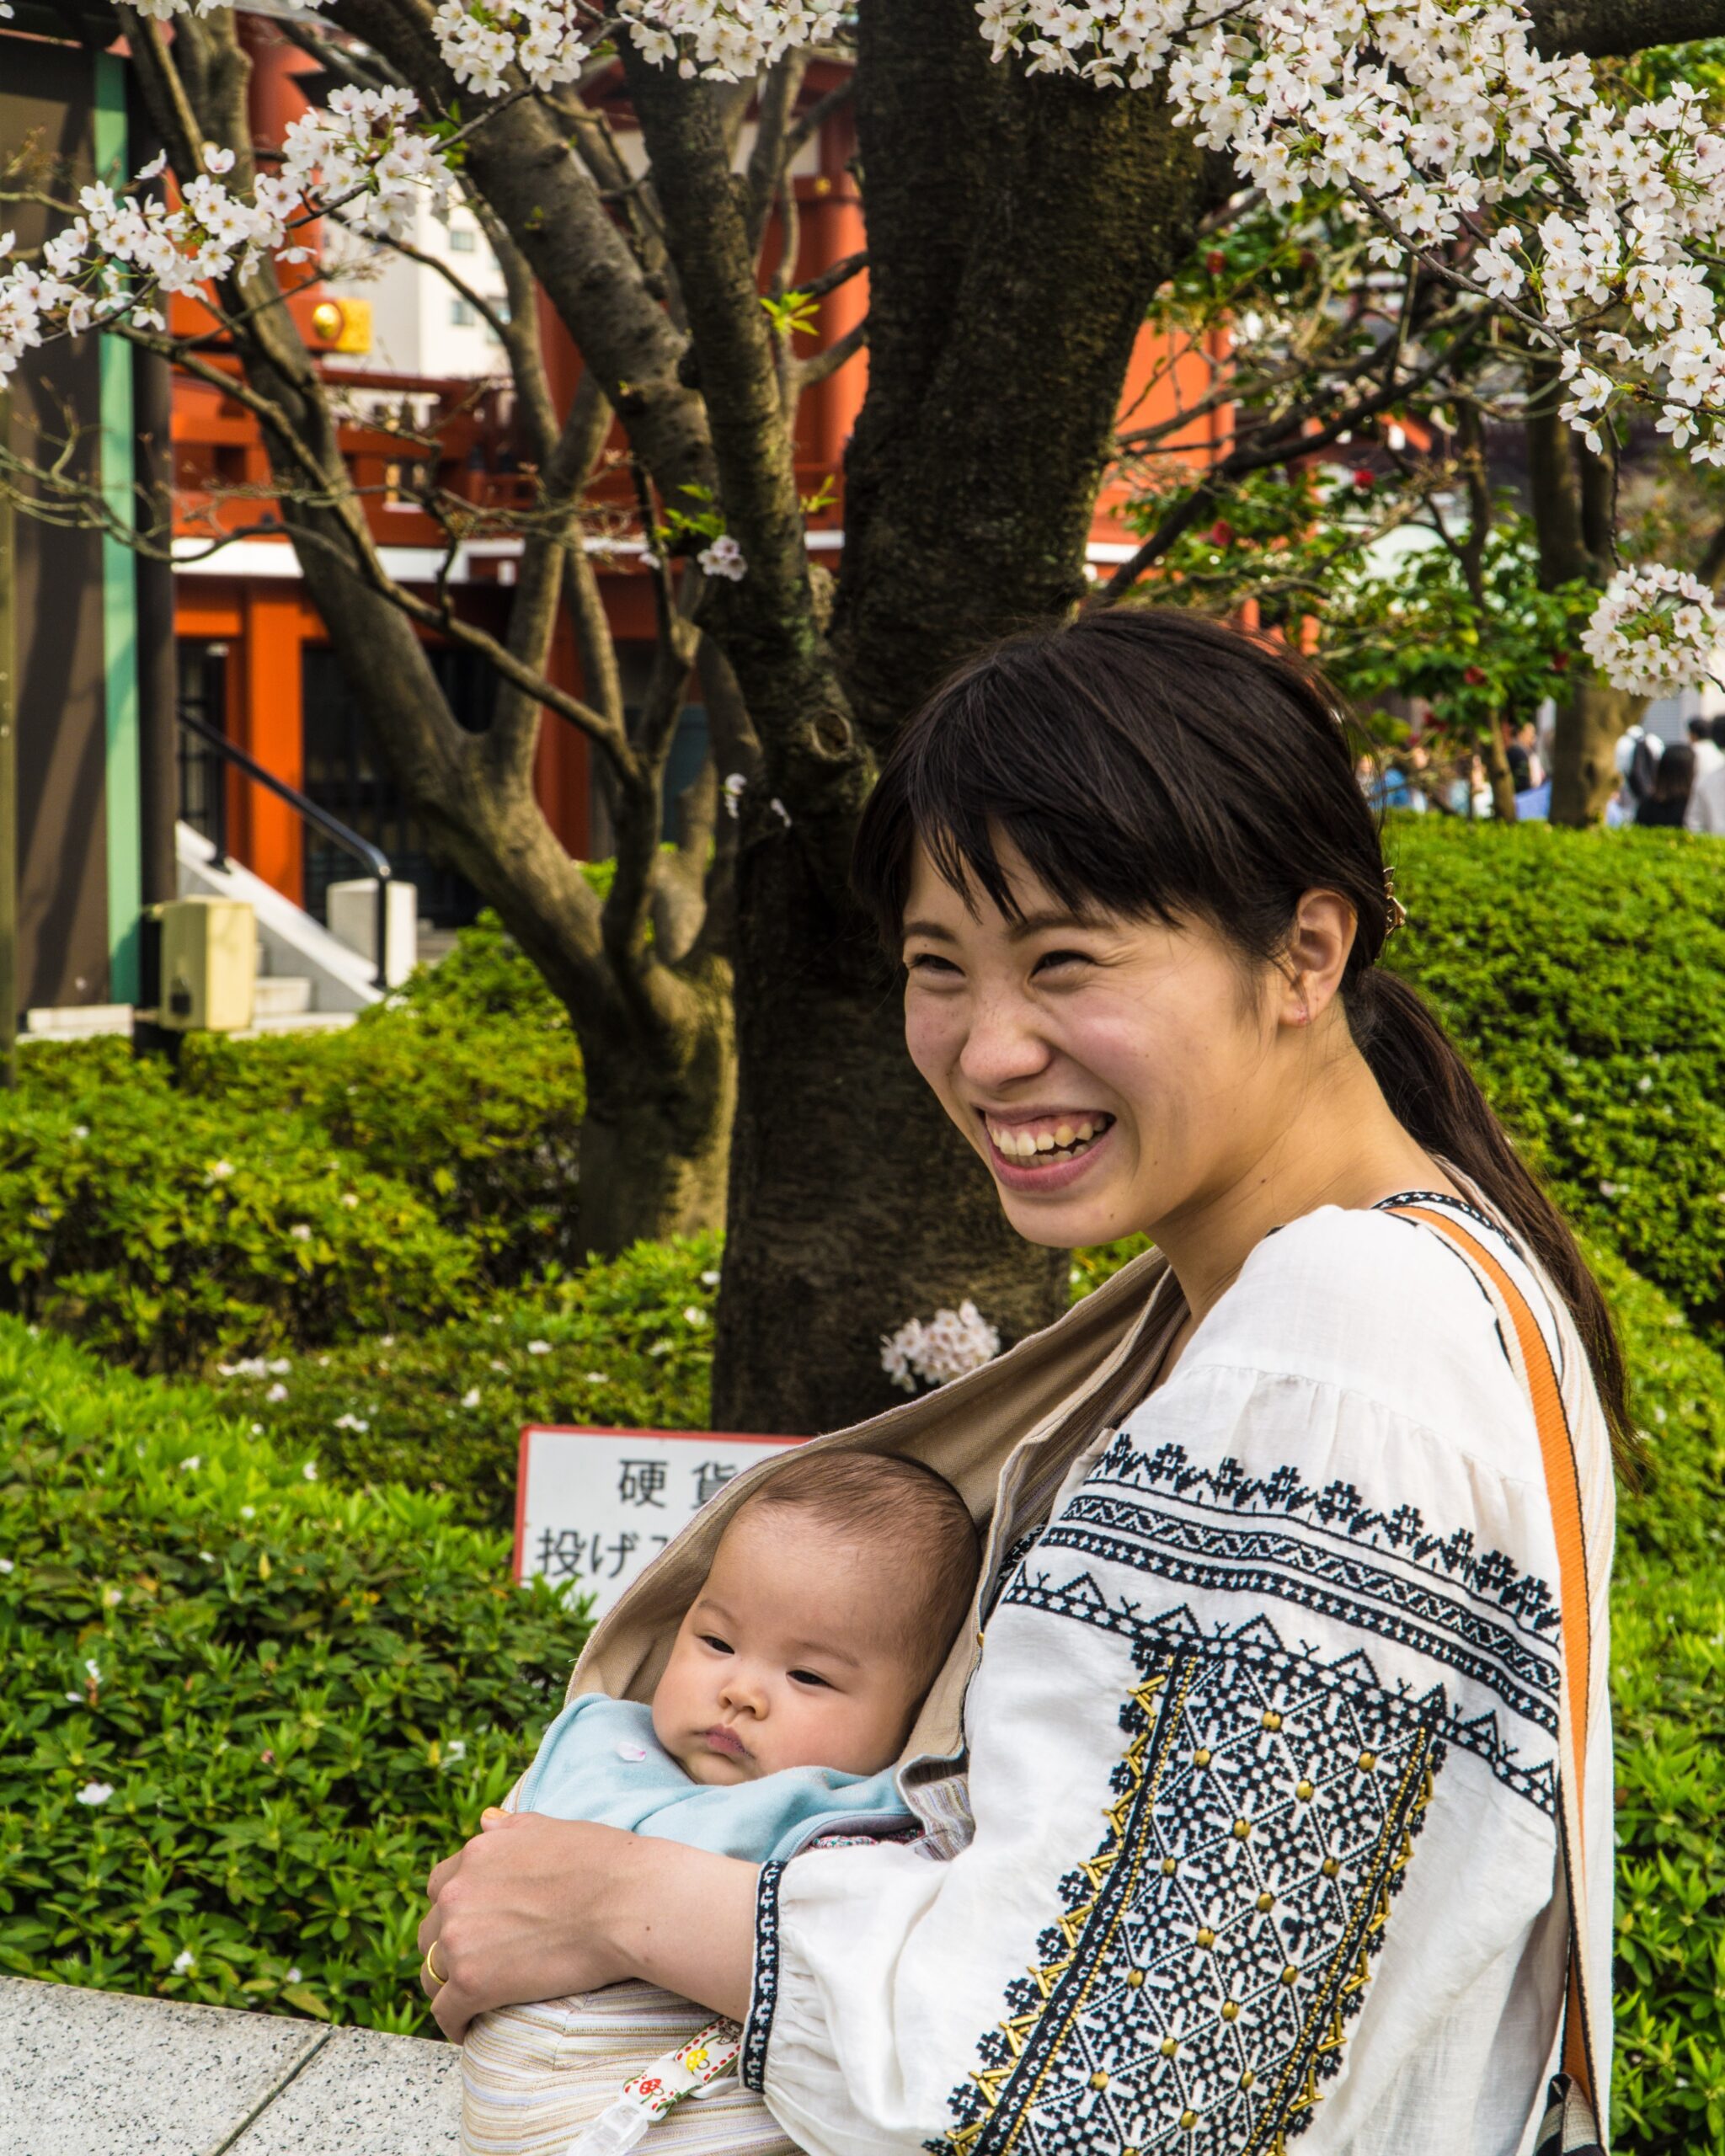 guille-alvarez-Woman holding baby in harnessunsplash